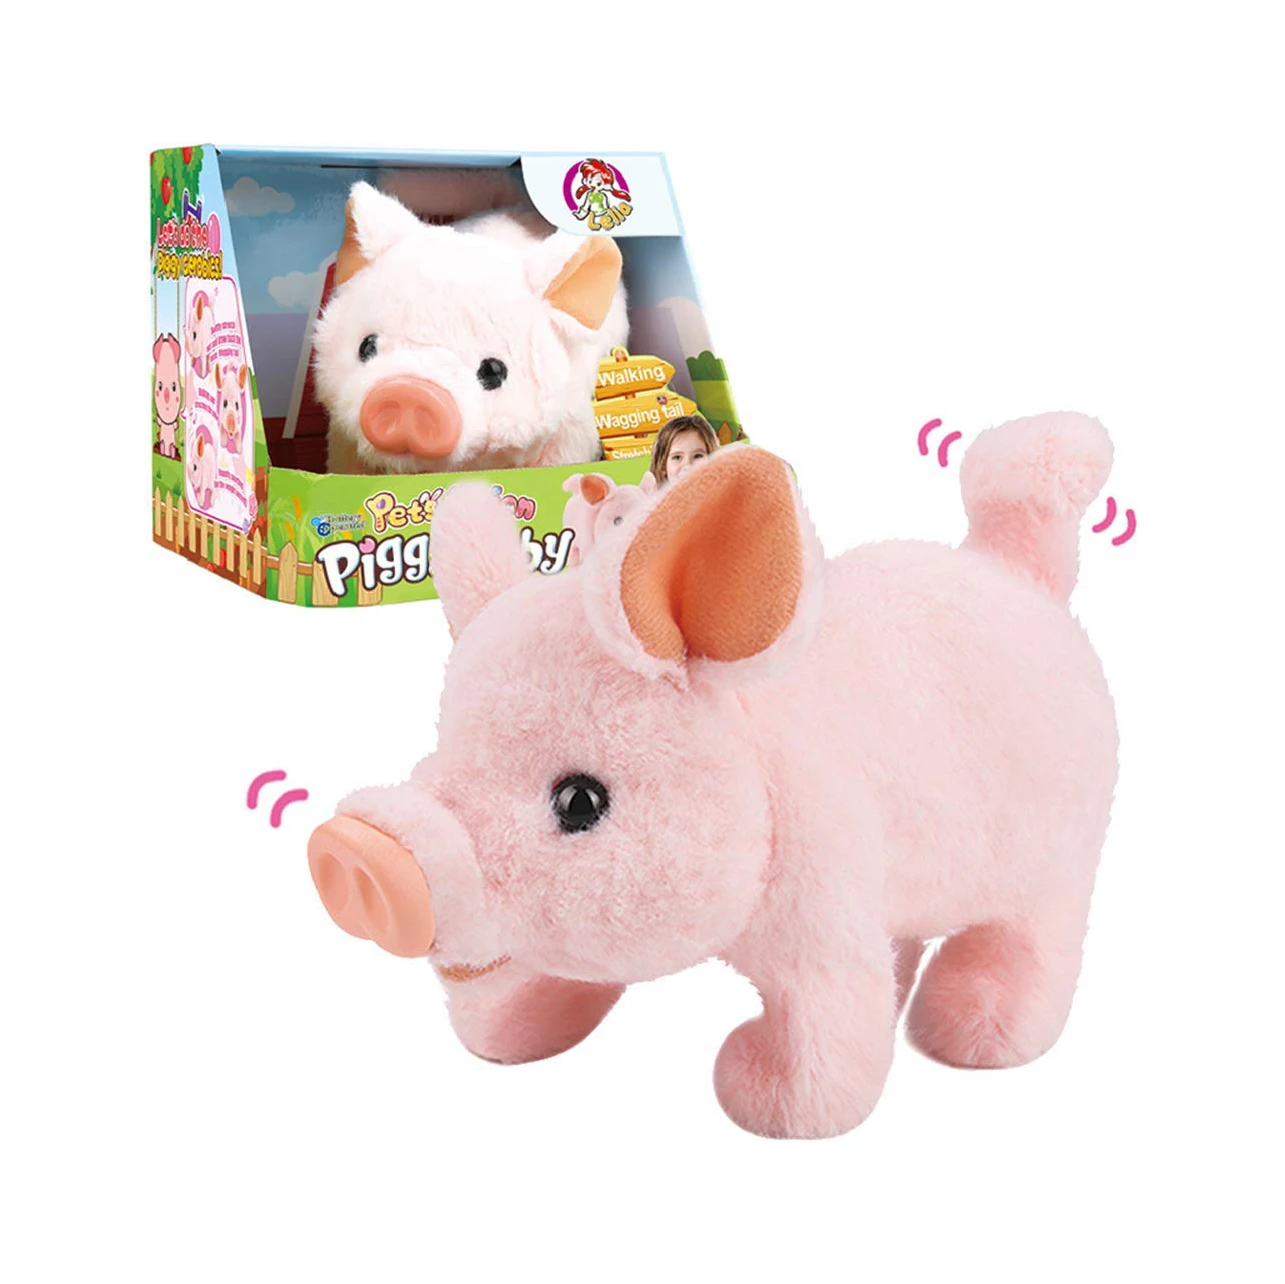 Talking Pig Pig Hard To Find Fuzzy Toy Pig Vintage Rockstar Goldie Talking Pig Memories, Vintage Toys Toy Tech Talking Toy Pig